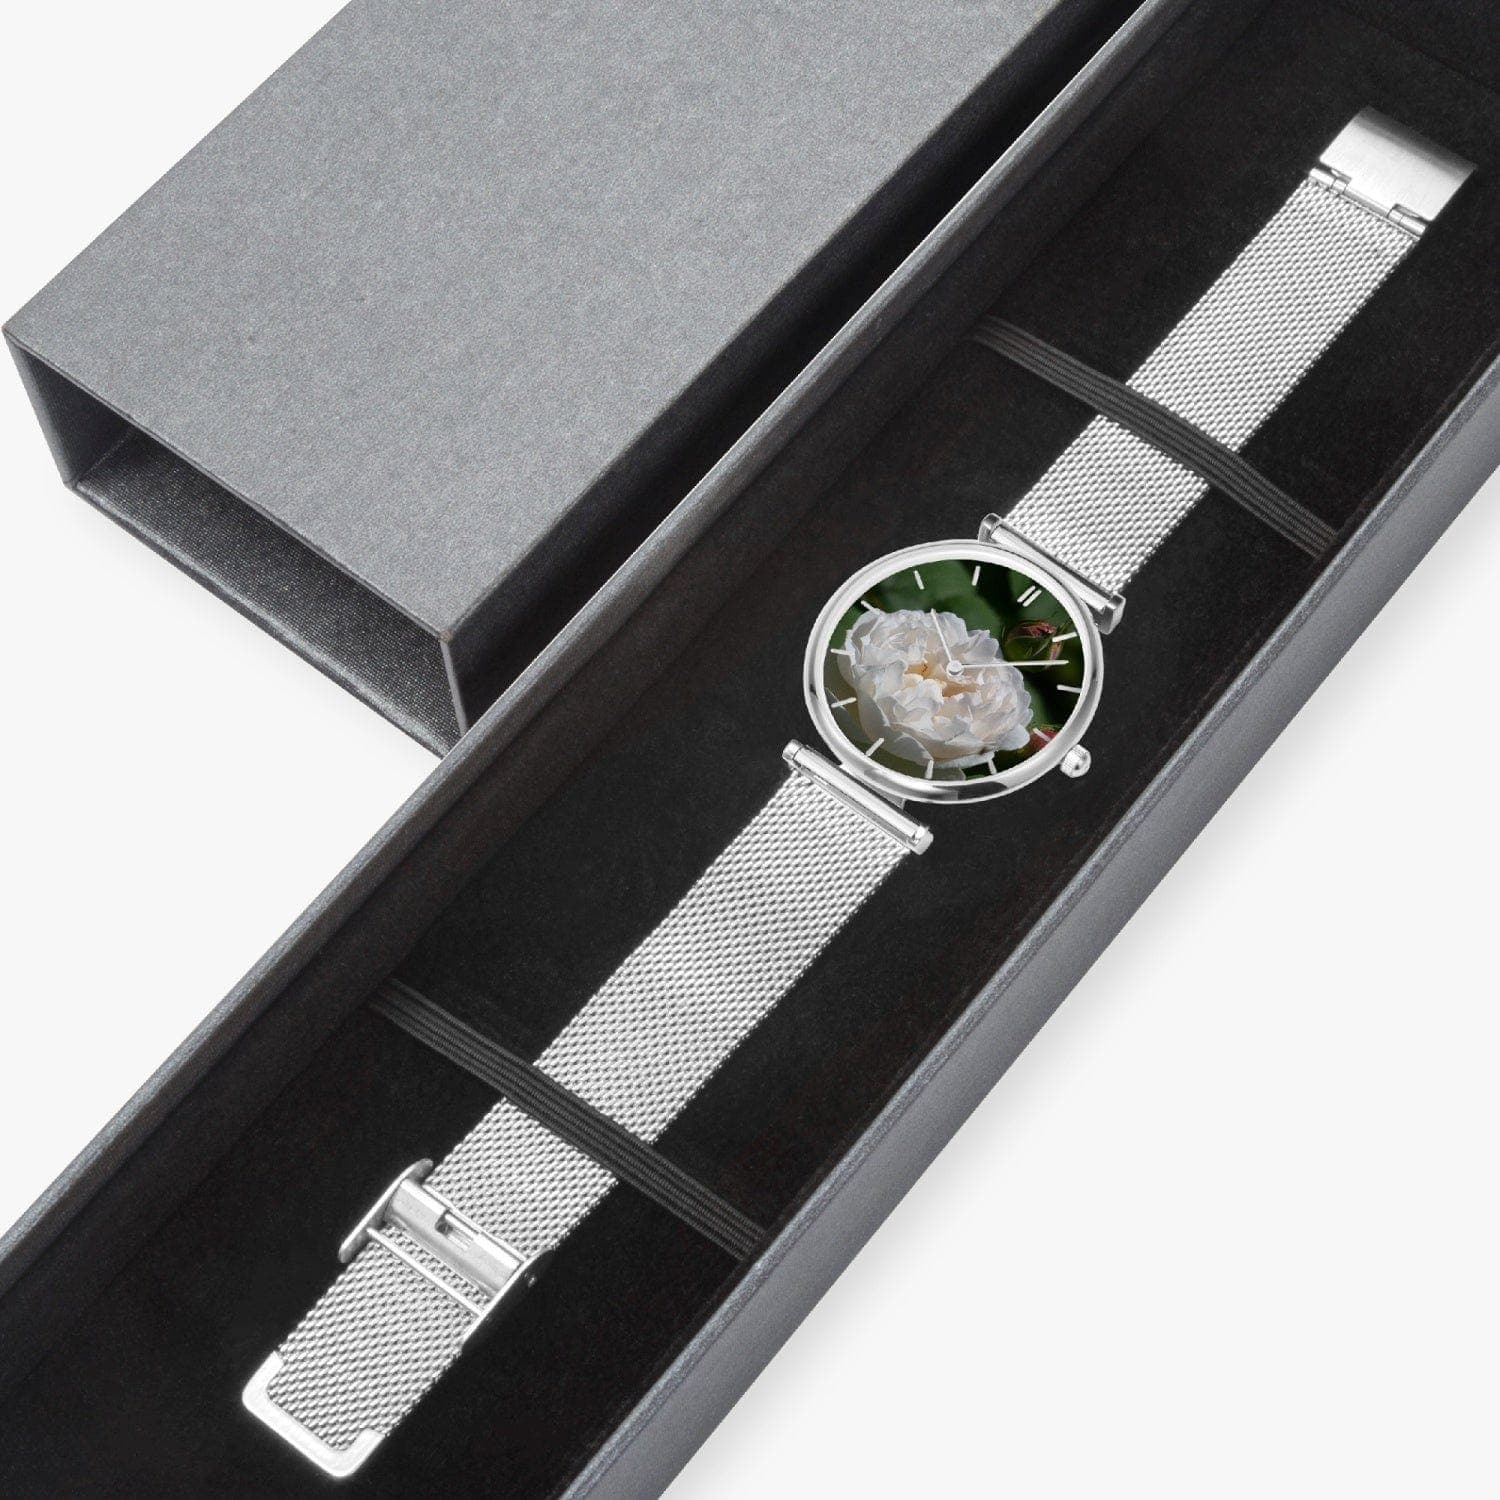 White rose. New Stylish Ultra-Thin Quartz Watch, by Ingrid Hütten